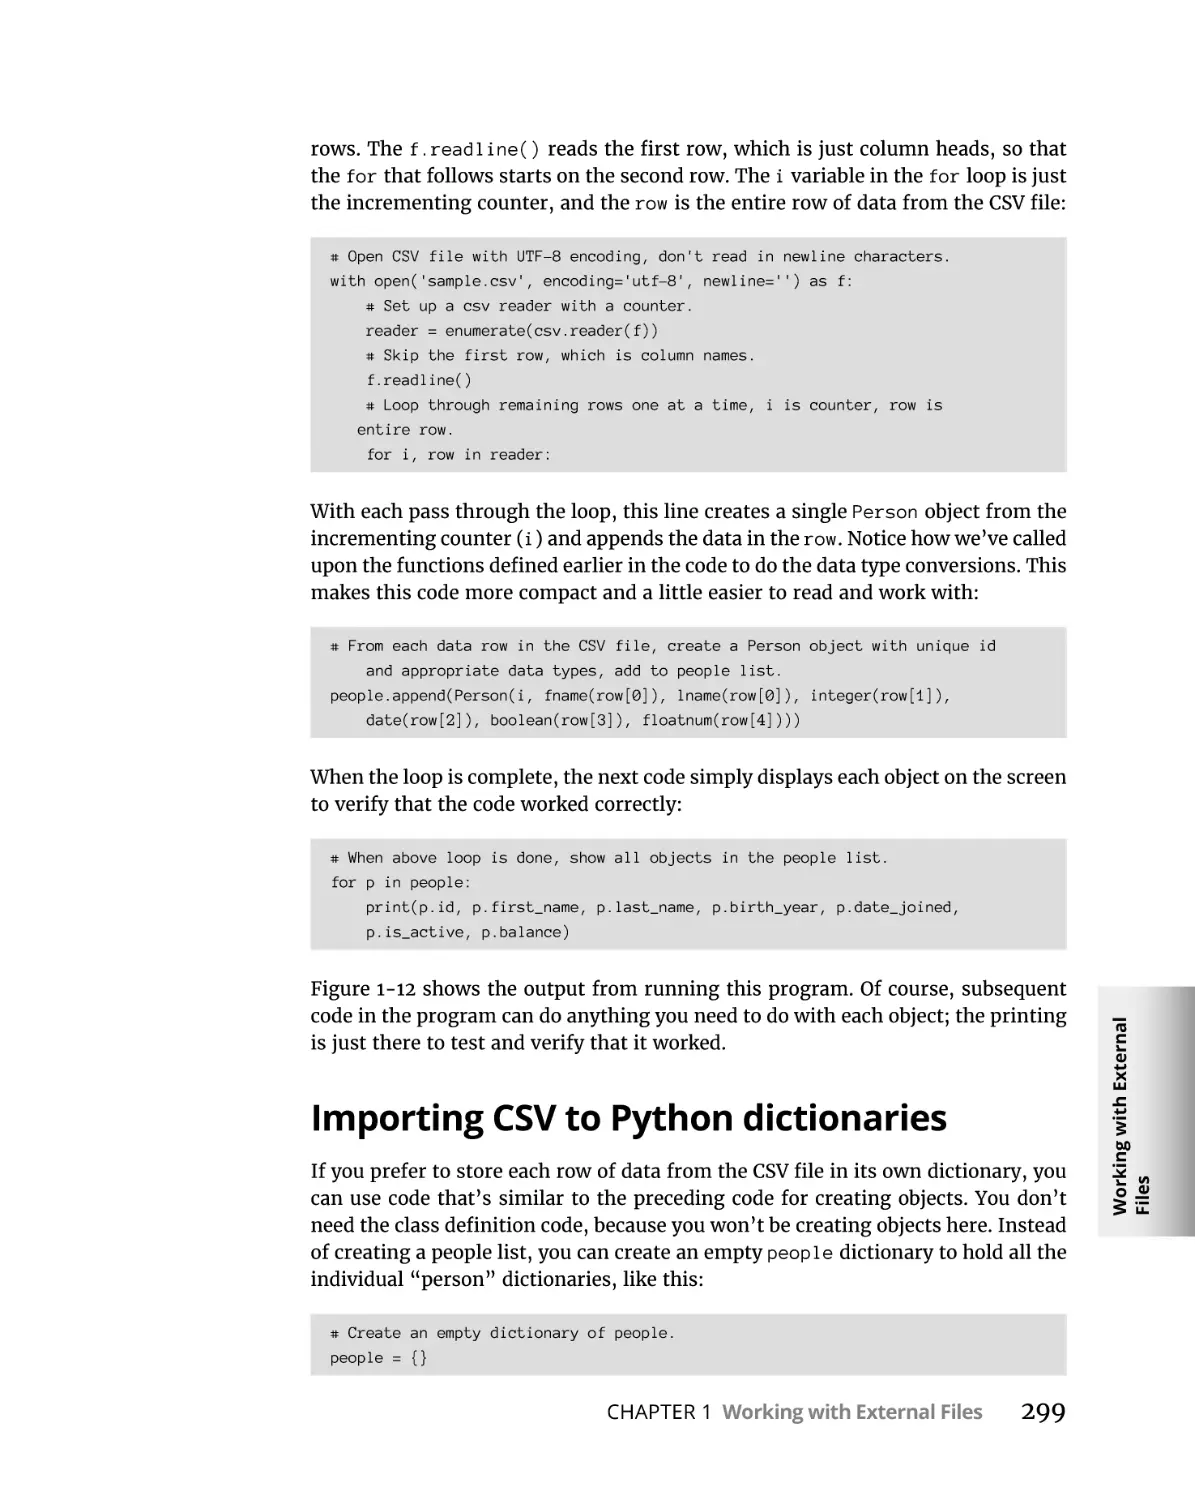 Importing CSV to Python dictionaries